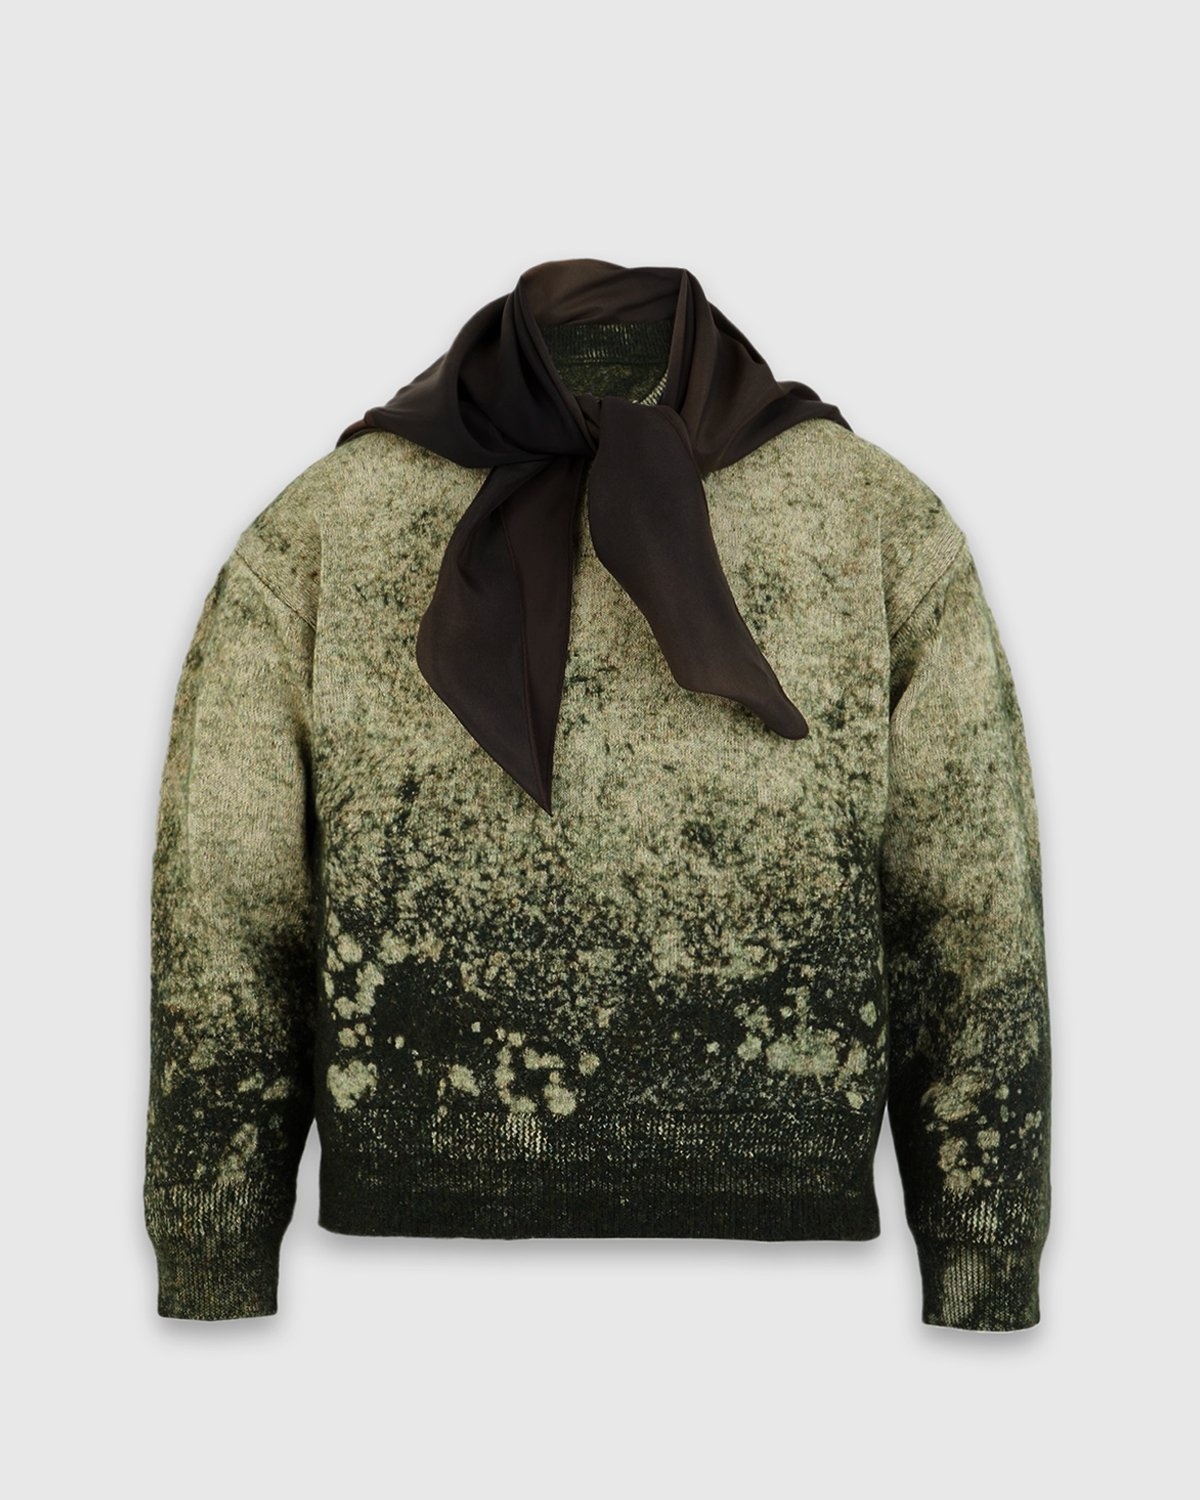 Maison Margiela – Discharged Wool Sweater - Crewnecks - Green - Image 1